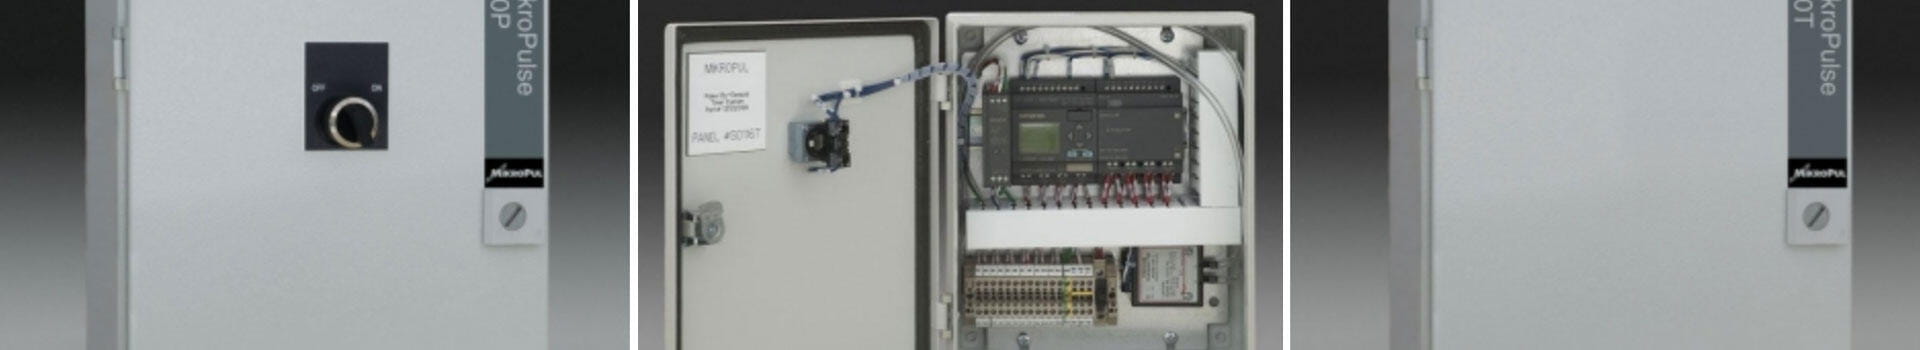 MikroPulse 100 集尘器控制器